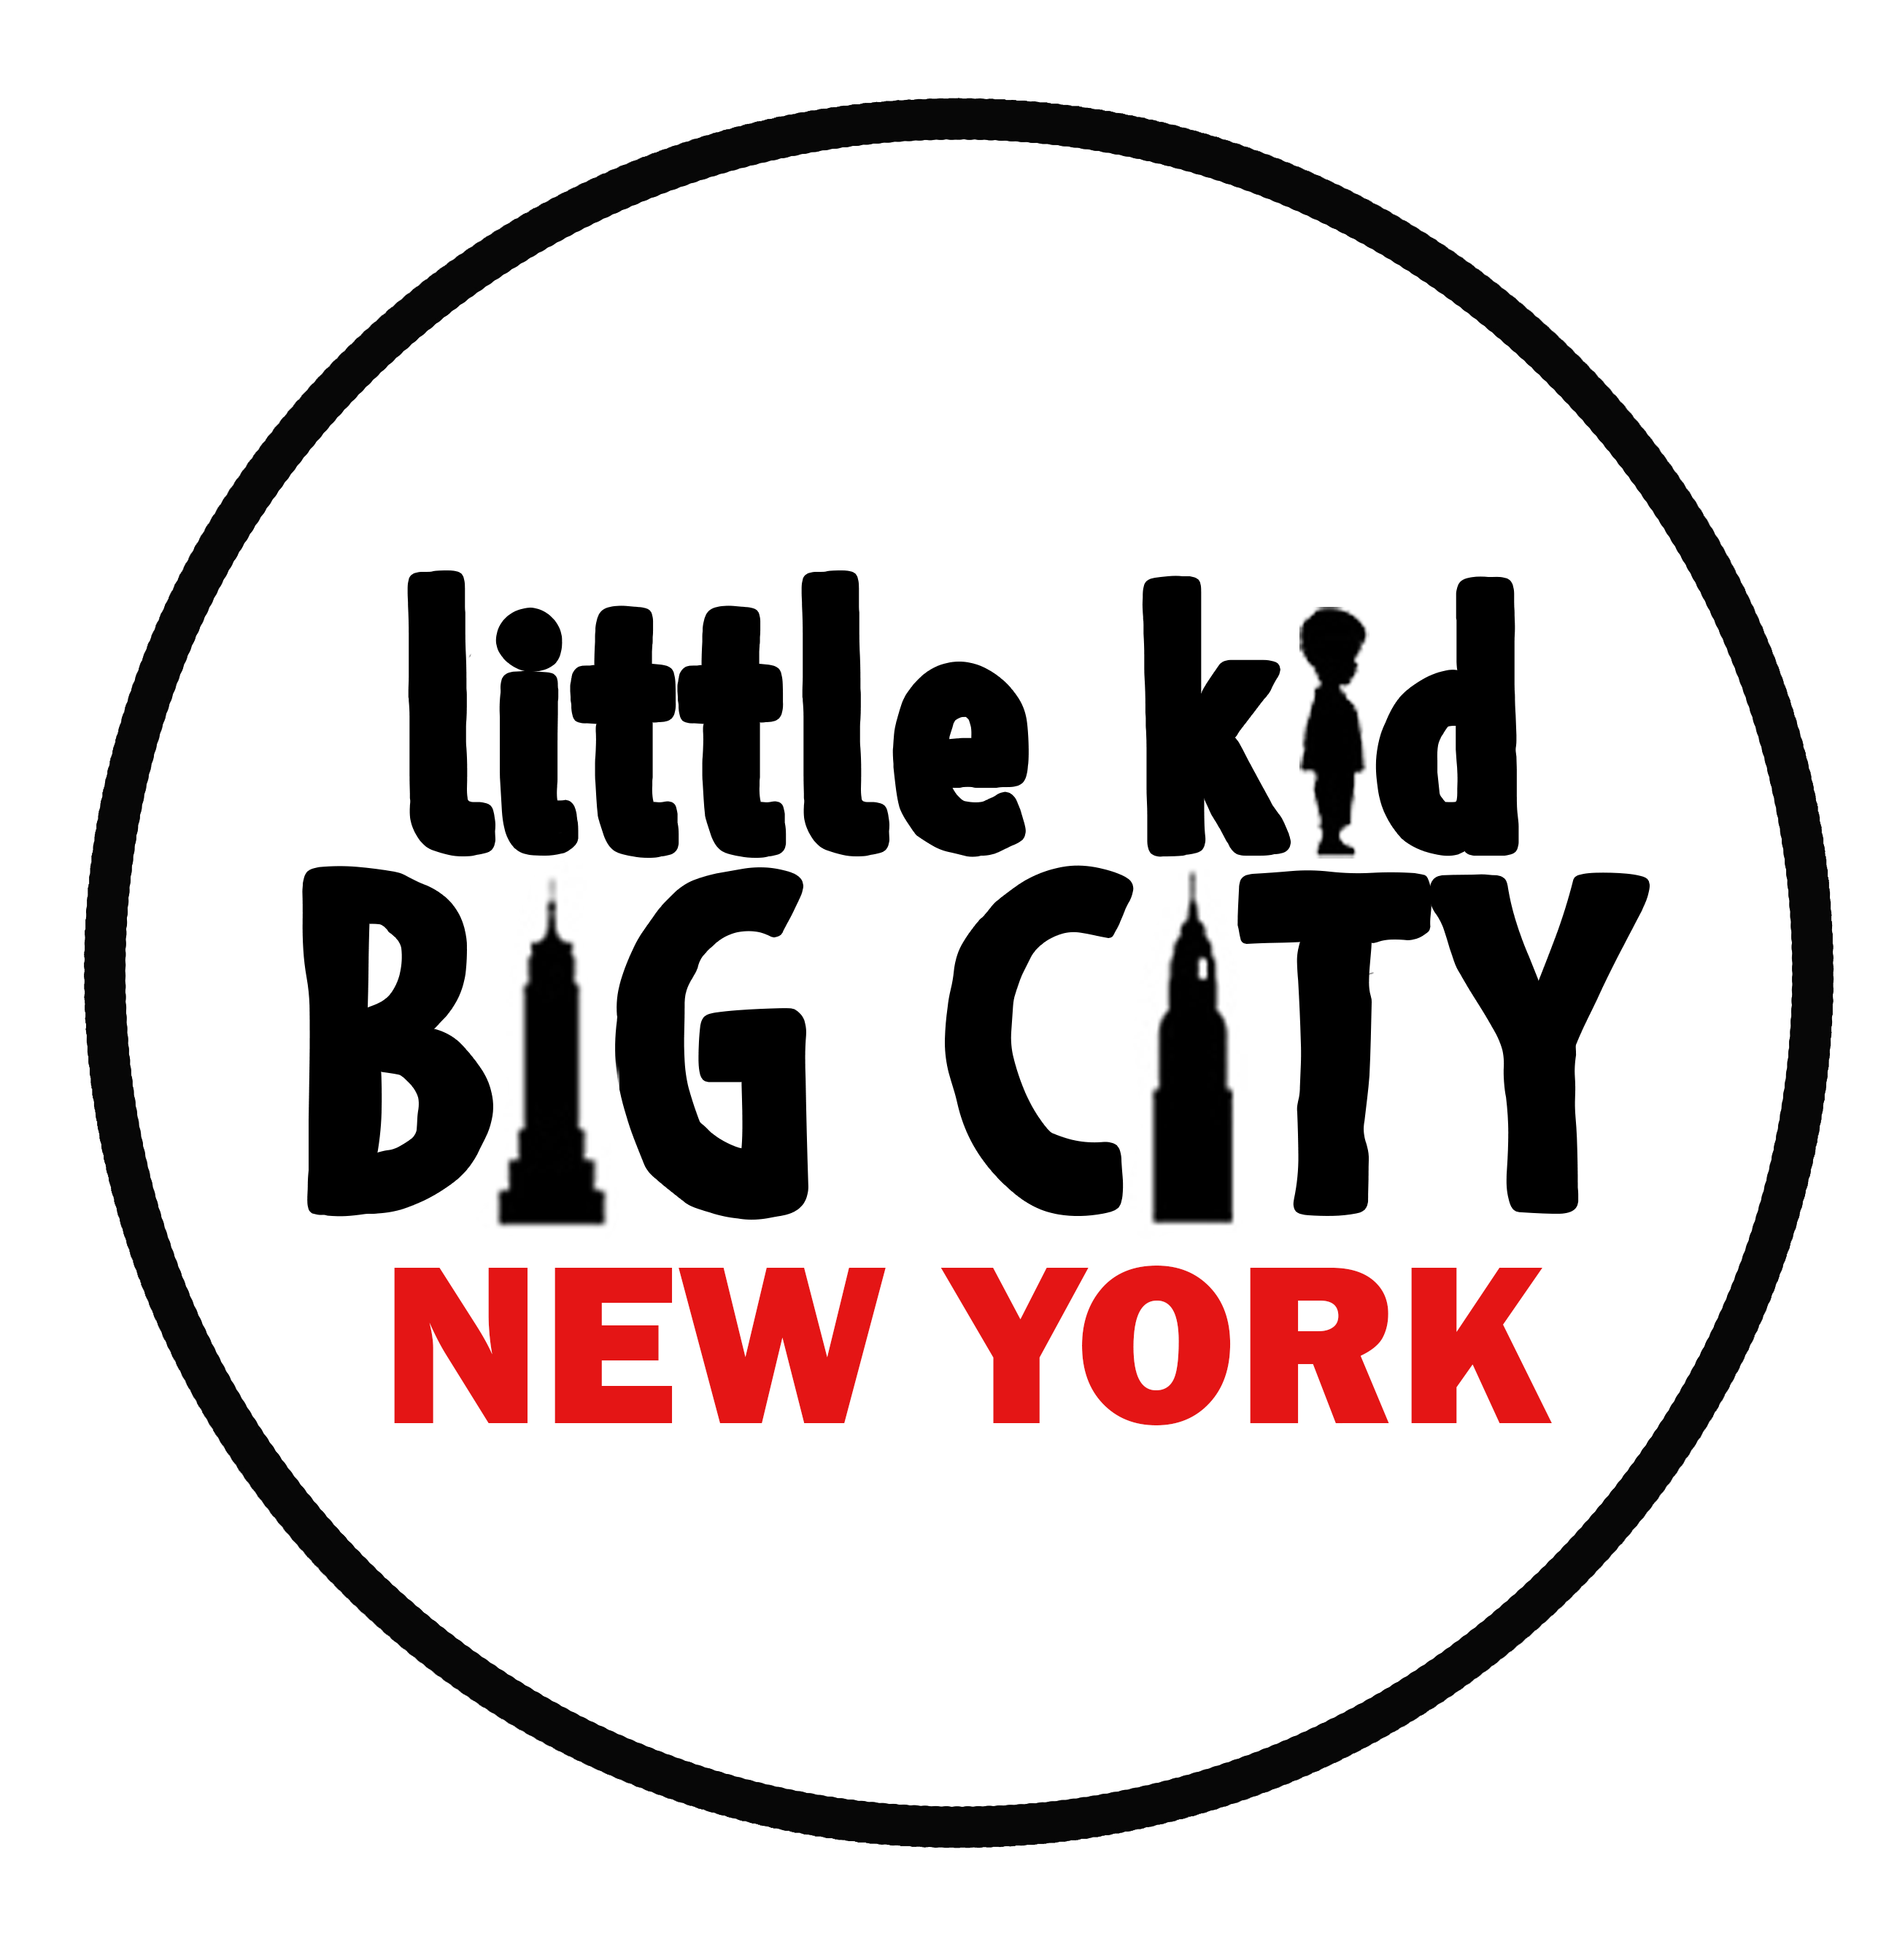 Little Kid Big City